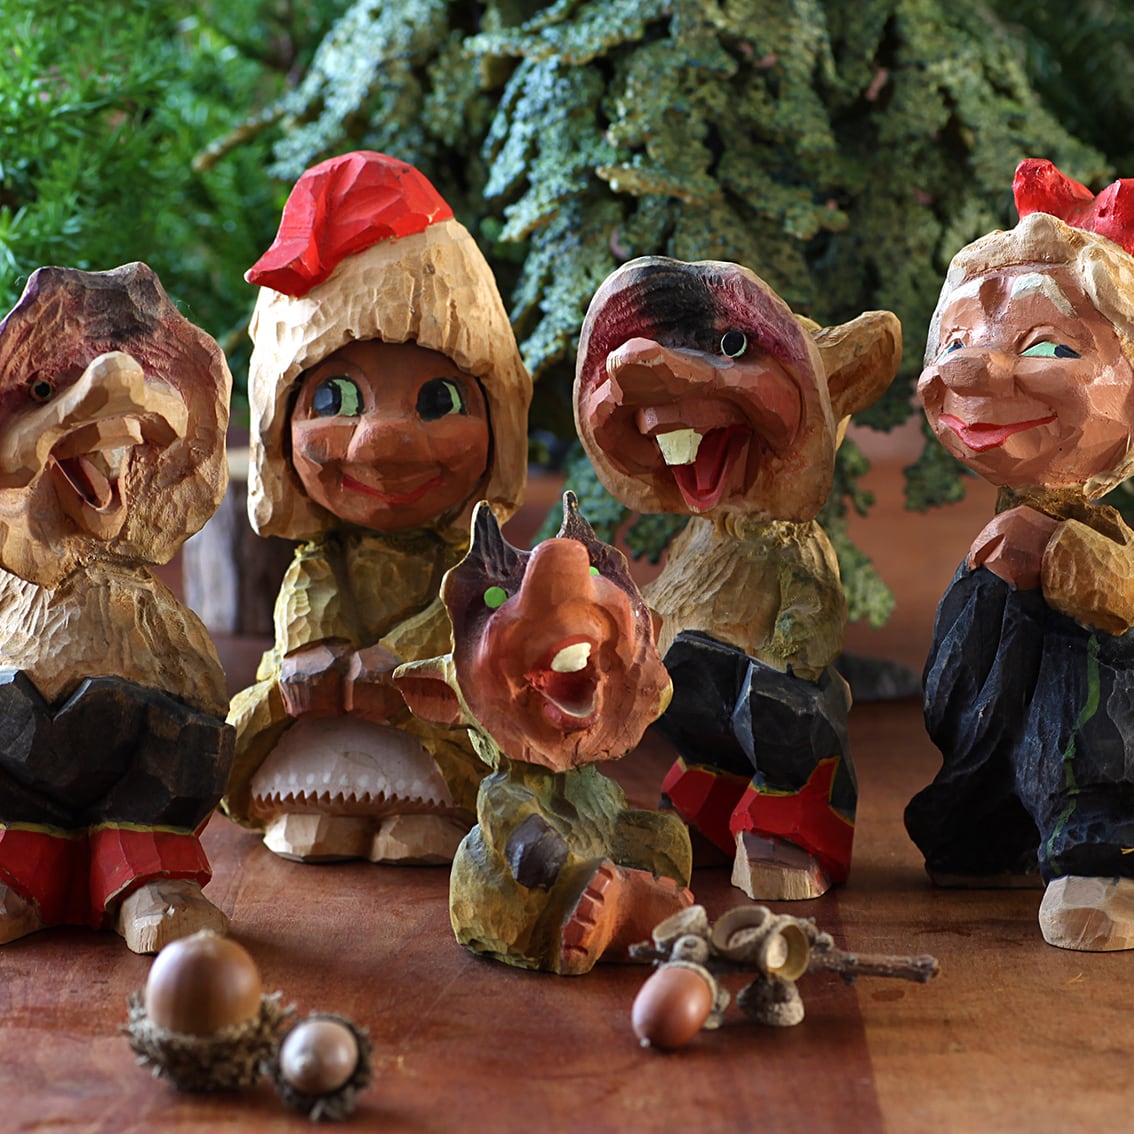 Henning ヘニング Troll トロール 木彫り人形-3 北欧ヴィンテージ ☆わけあり☆ kogmas 北欧ヴィンテージ食器のコグマス